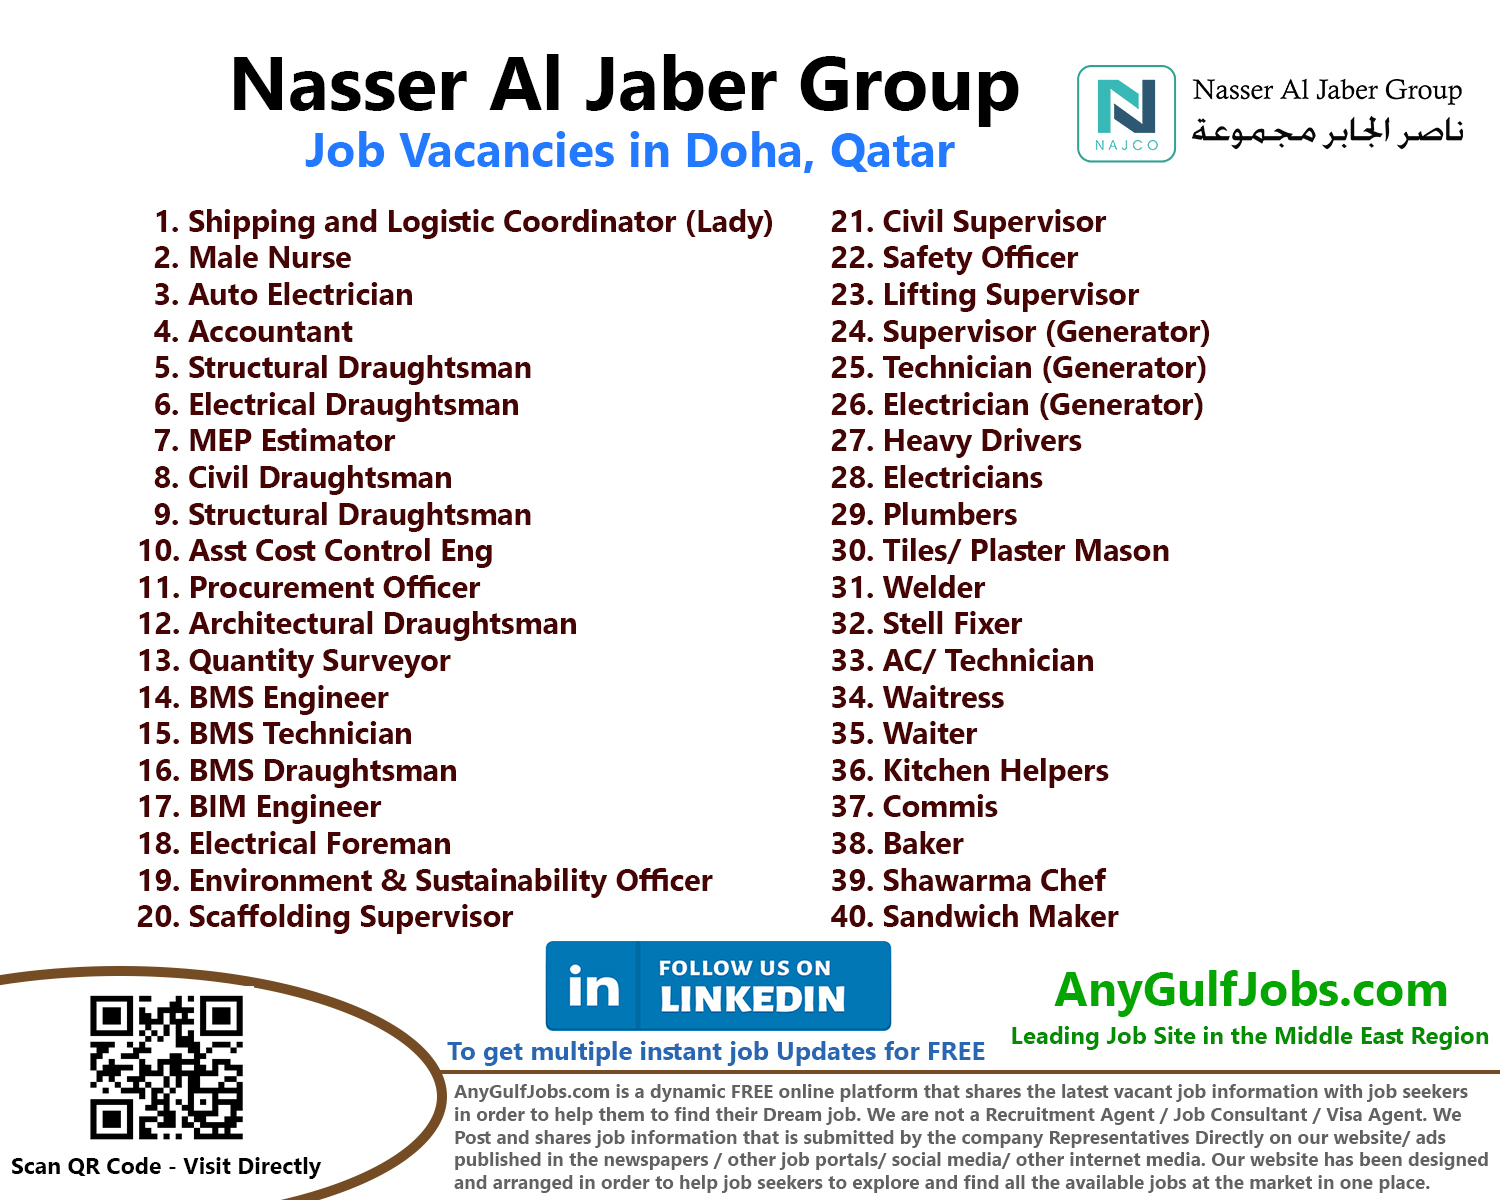 Nasser Al Jaber Group Job Vacancies in Qatar